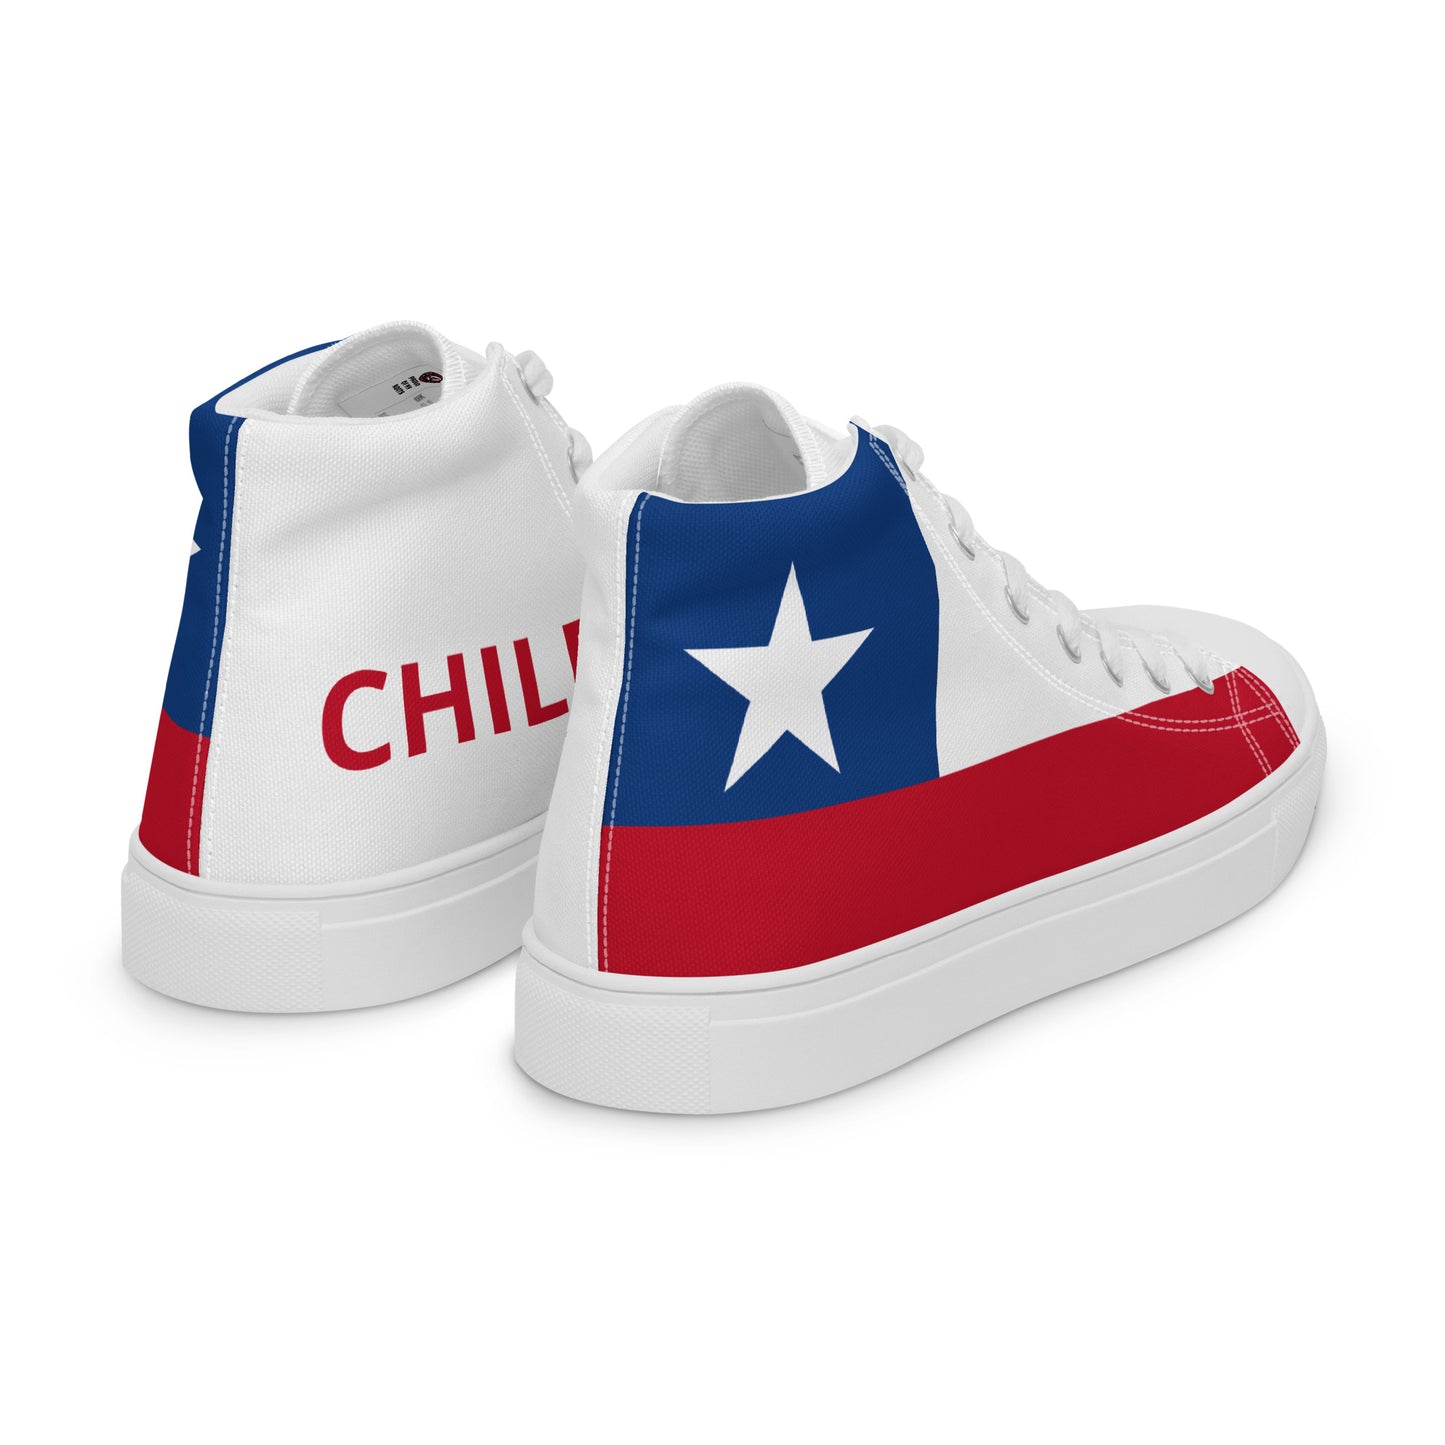 Chile - Men - Bandera - High top shoes